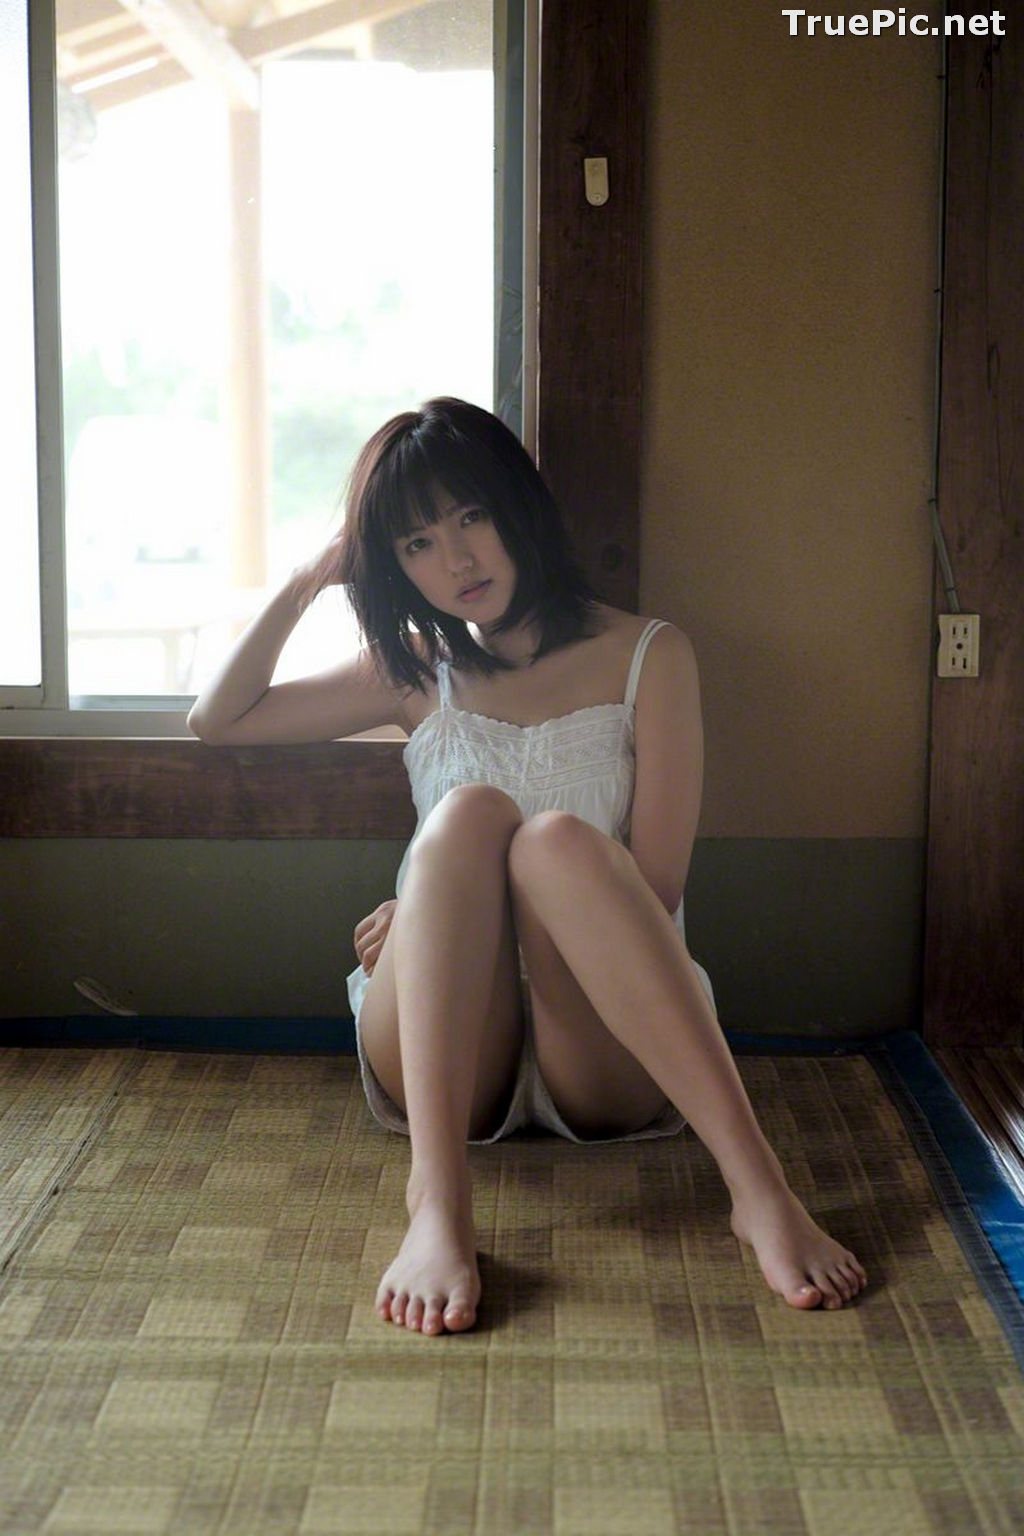 Image Wanibooks No.130 - Japanese Idol Singer and Actress - Erina Mano - TruePic.net - Picture-106